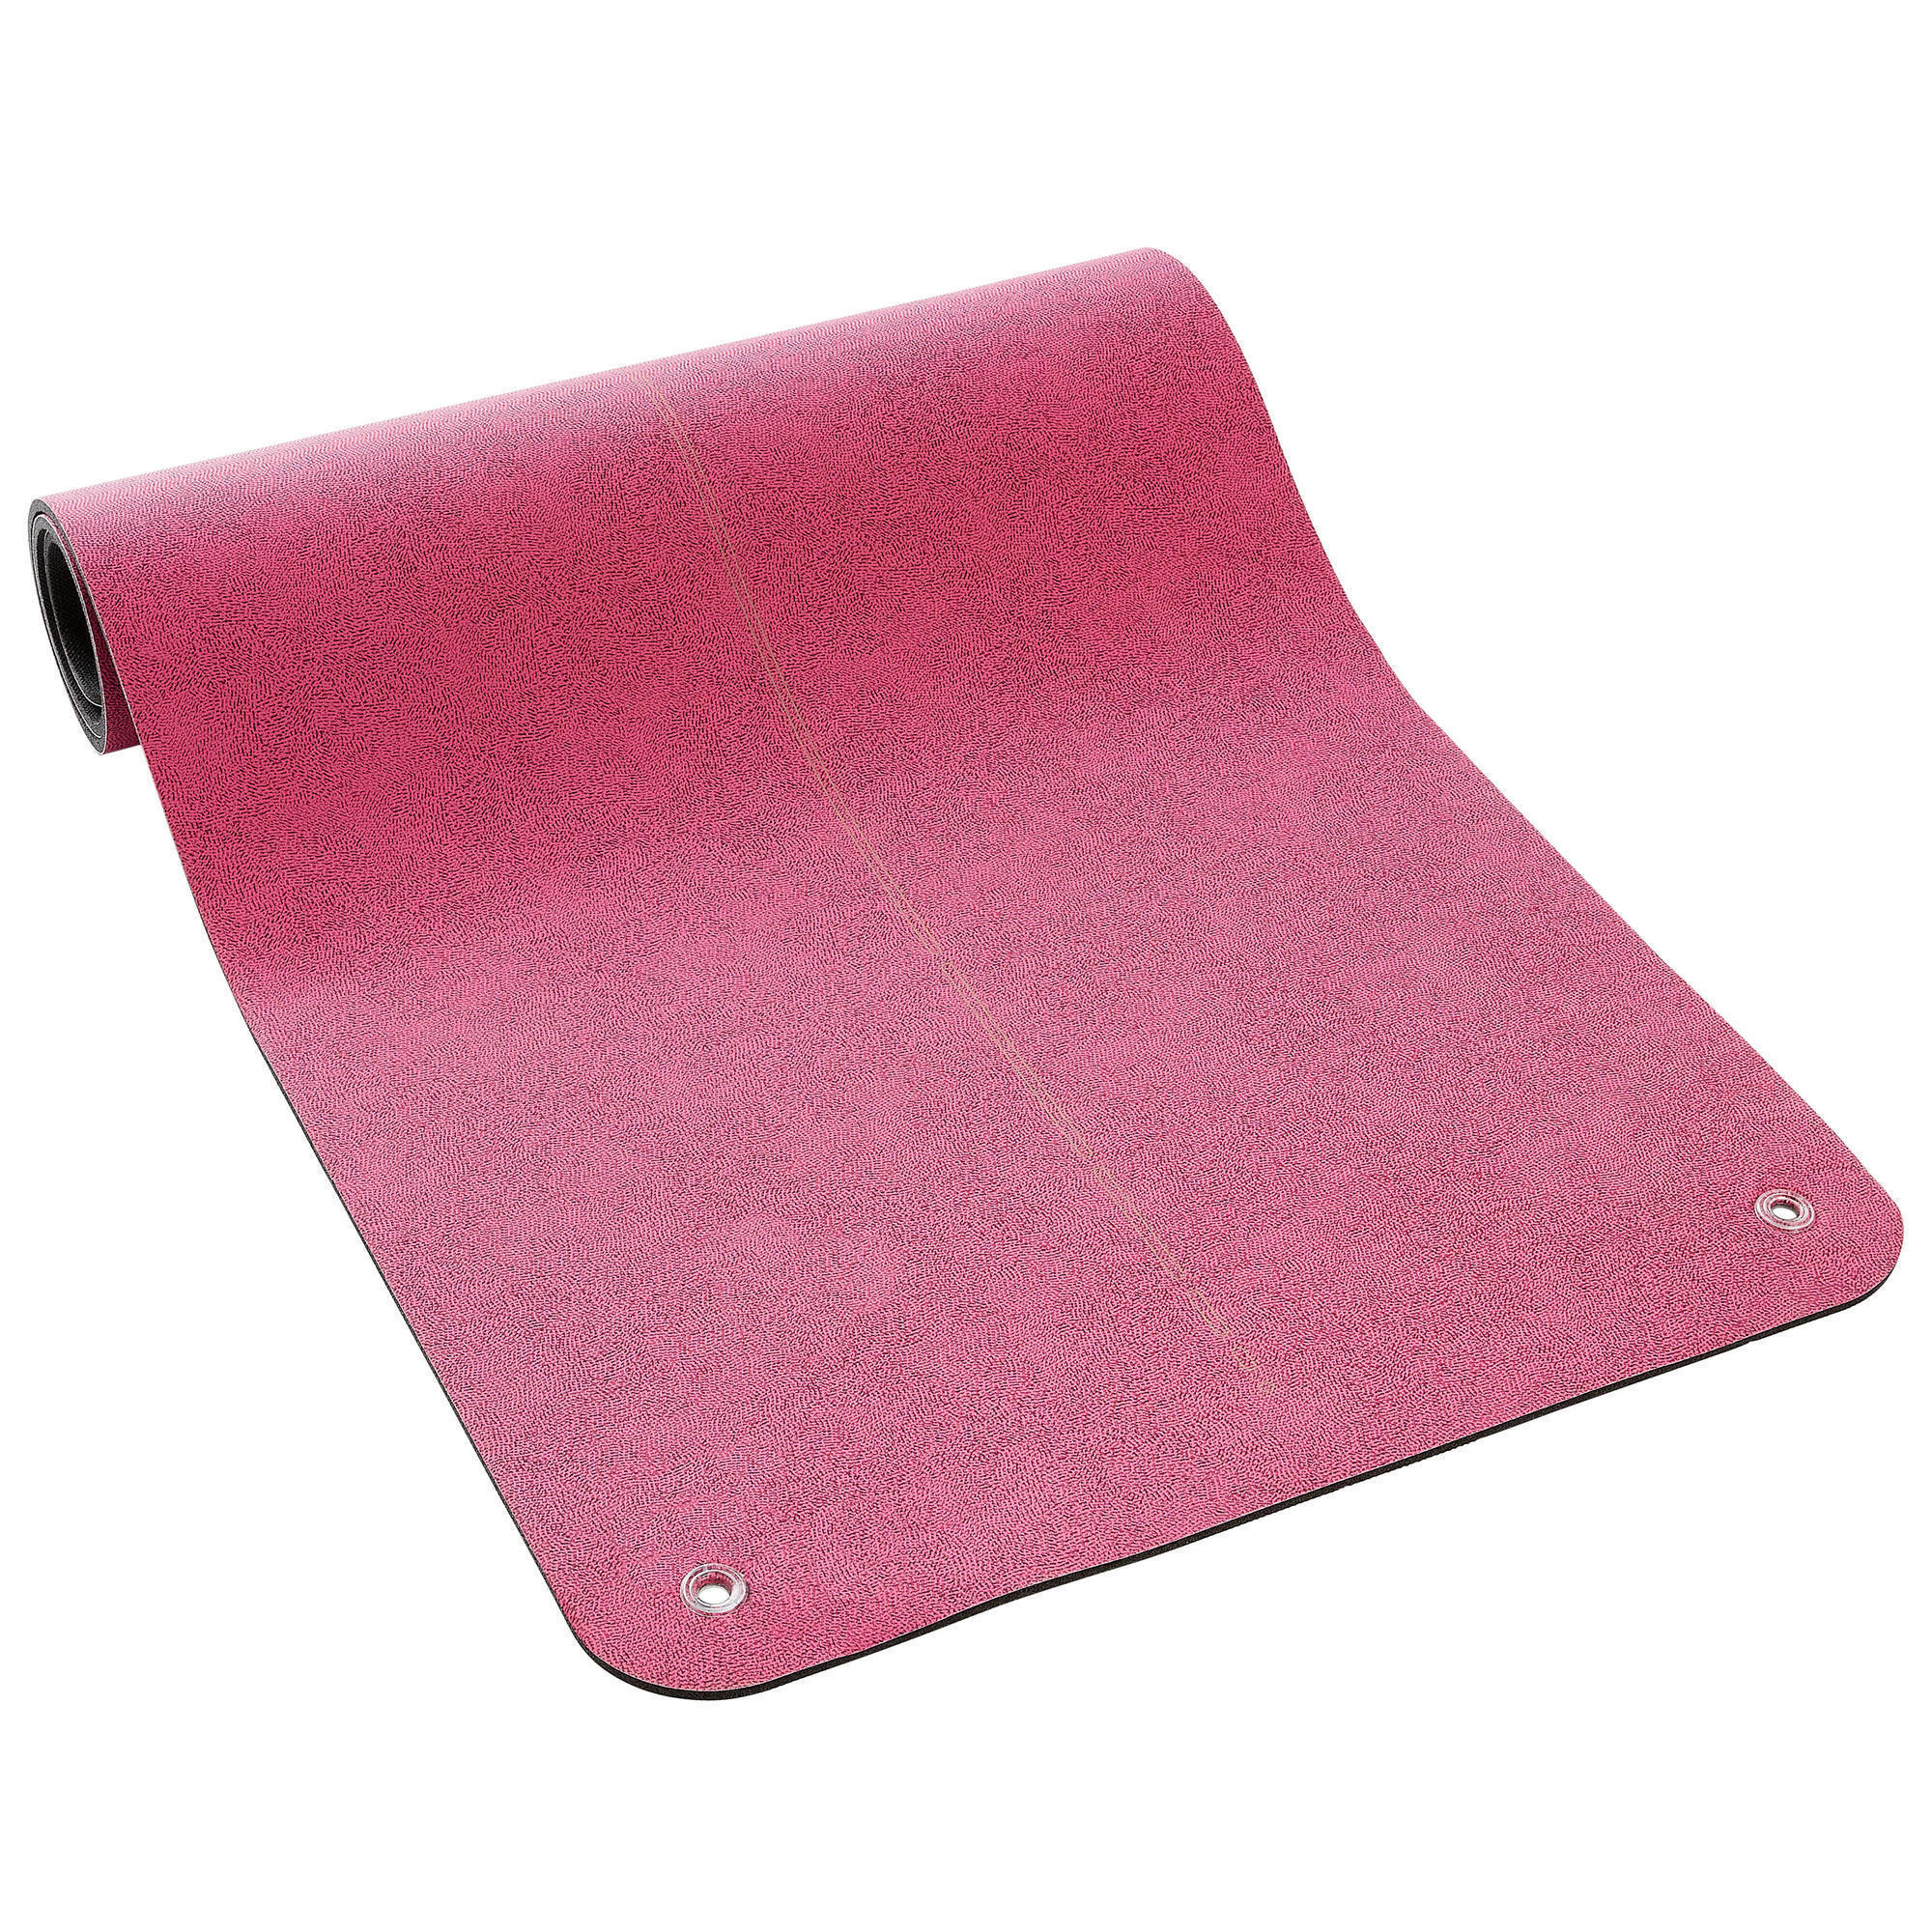 Durable Fitness Floor Mat Tonemat 500 - 170 cm x 62 cm x 8 mm - AOP Pink 1/3